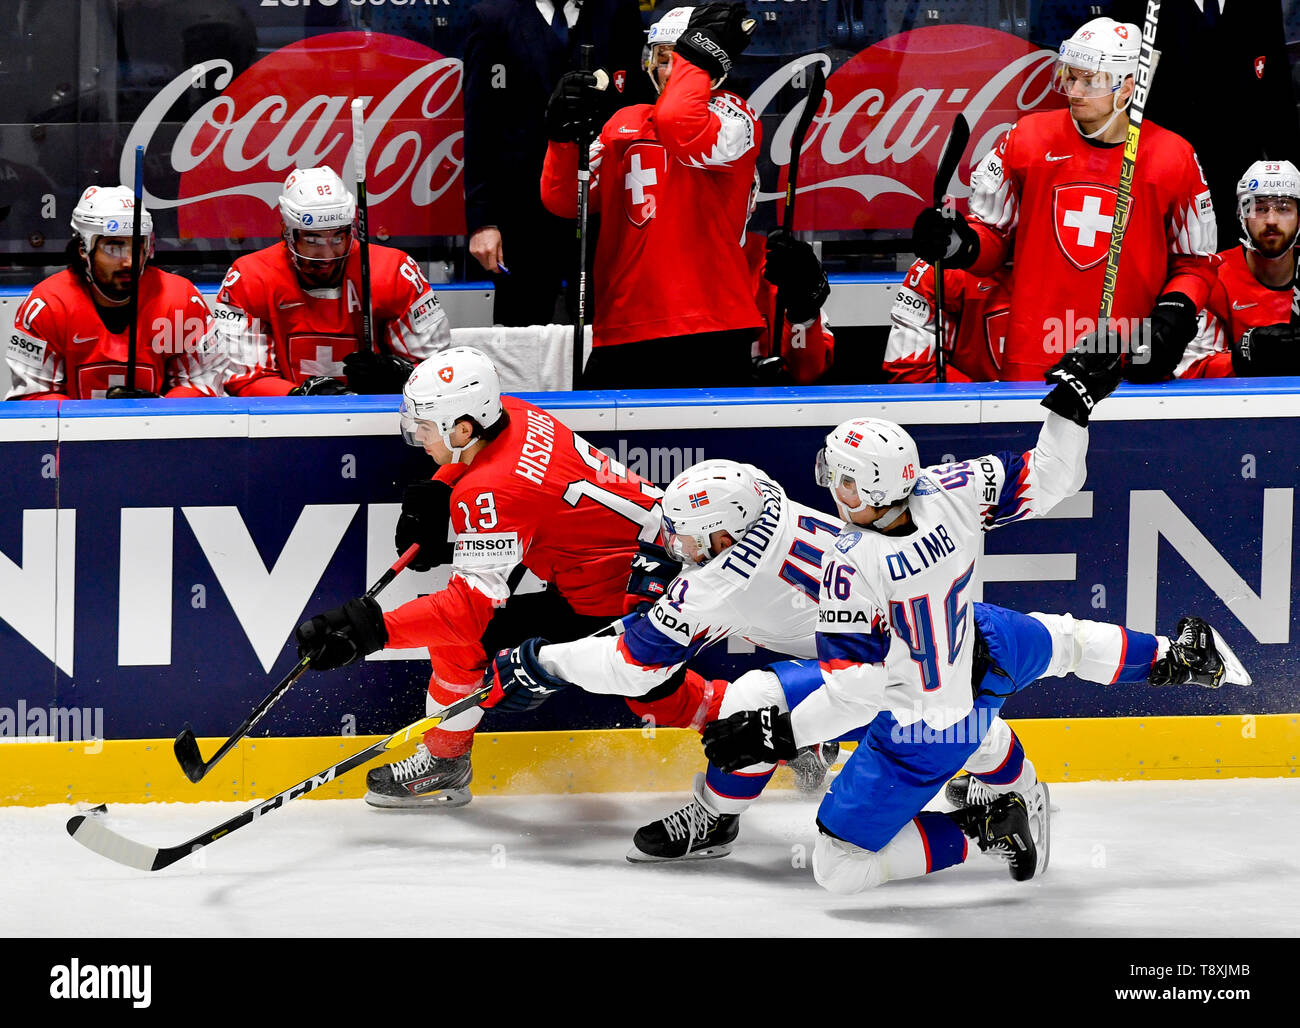 Swiss Ice Hockey Player Nico Hischier Editorial Stock Photo - Stock Image